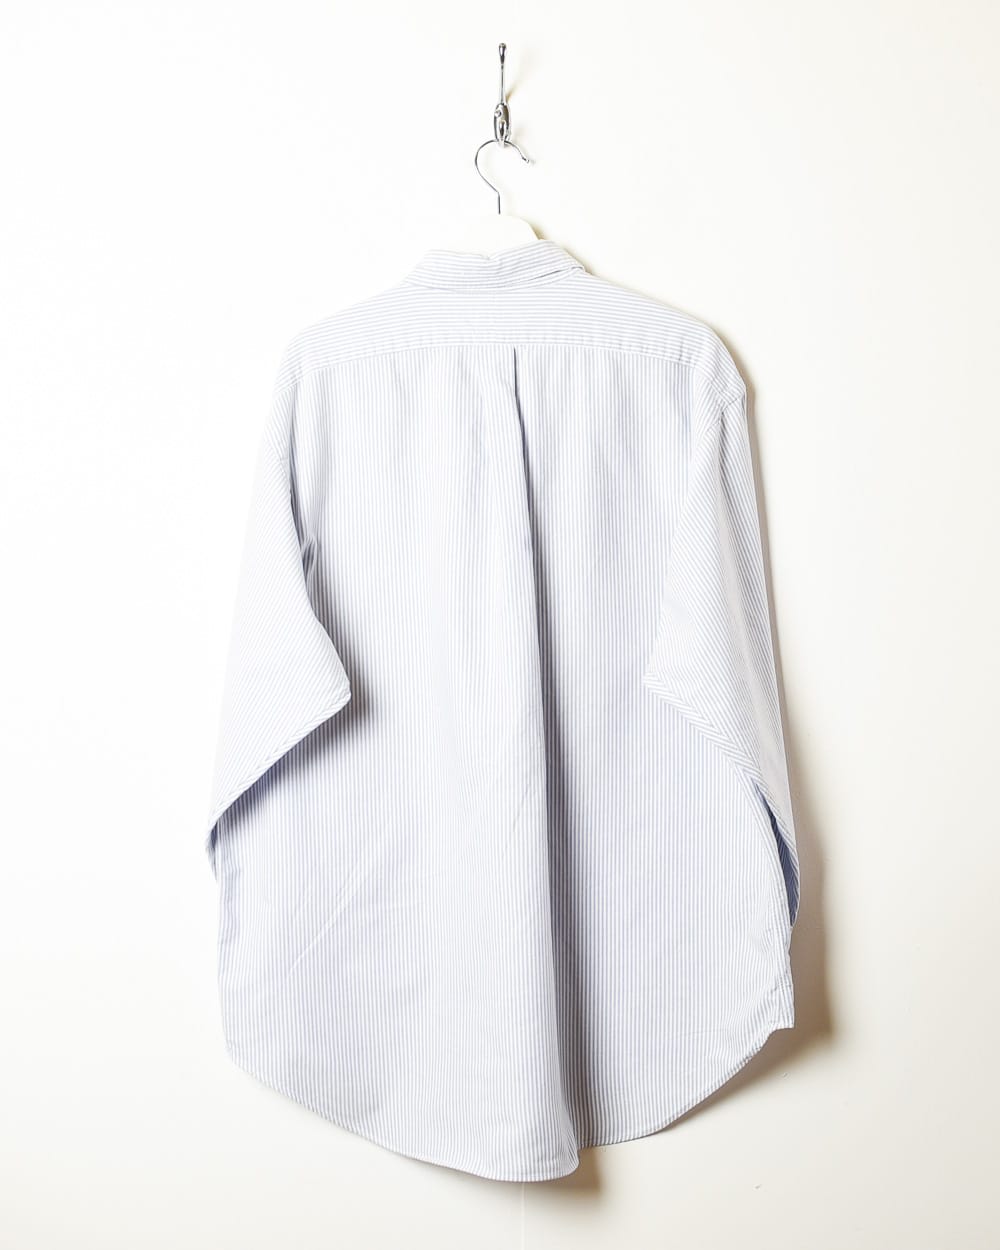 BabyBlue Polo Ralph Lauren Yarmouth Striped Shirt - X-Large